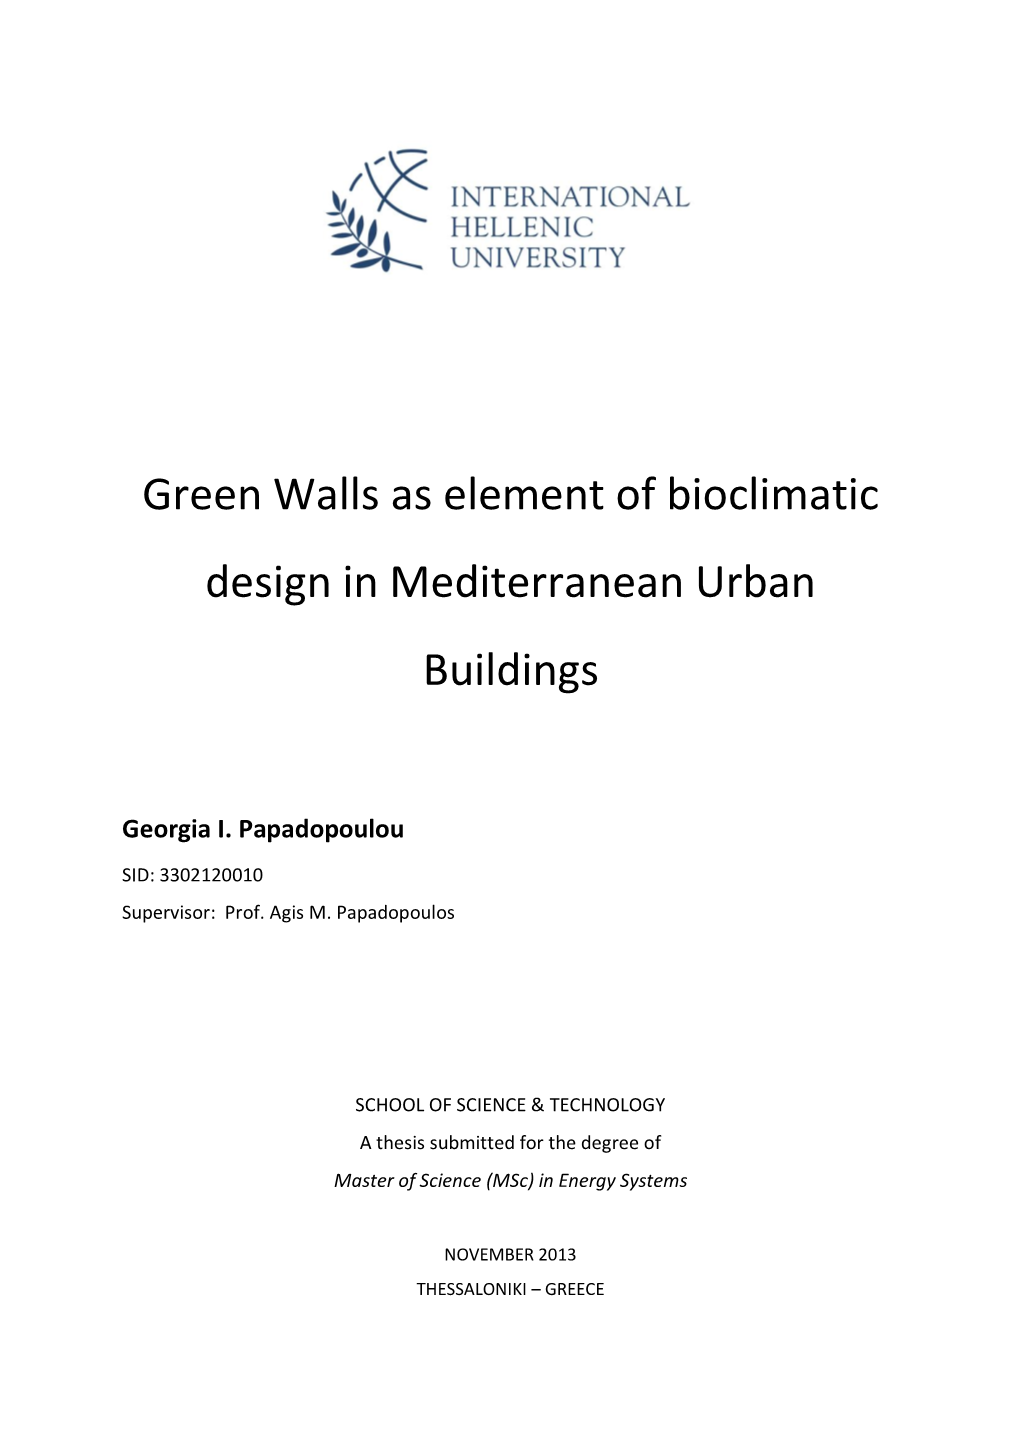 Green Walls As Element of Bioclimatic Design in Mediterranean Urban Buildings